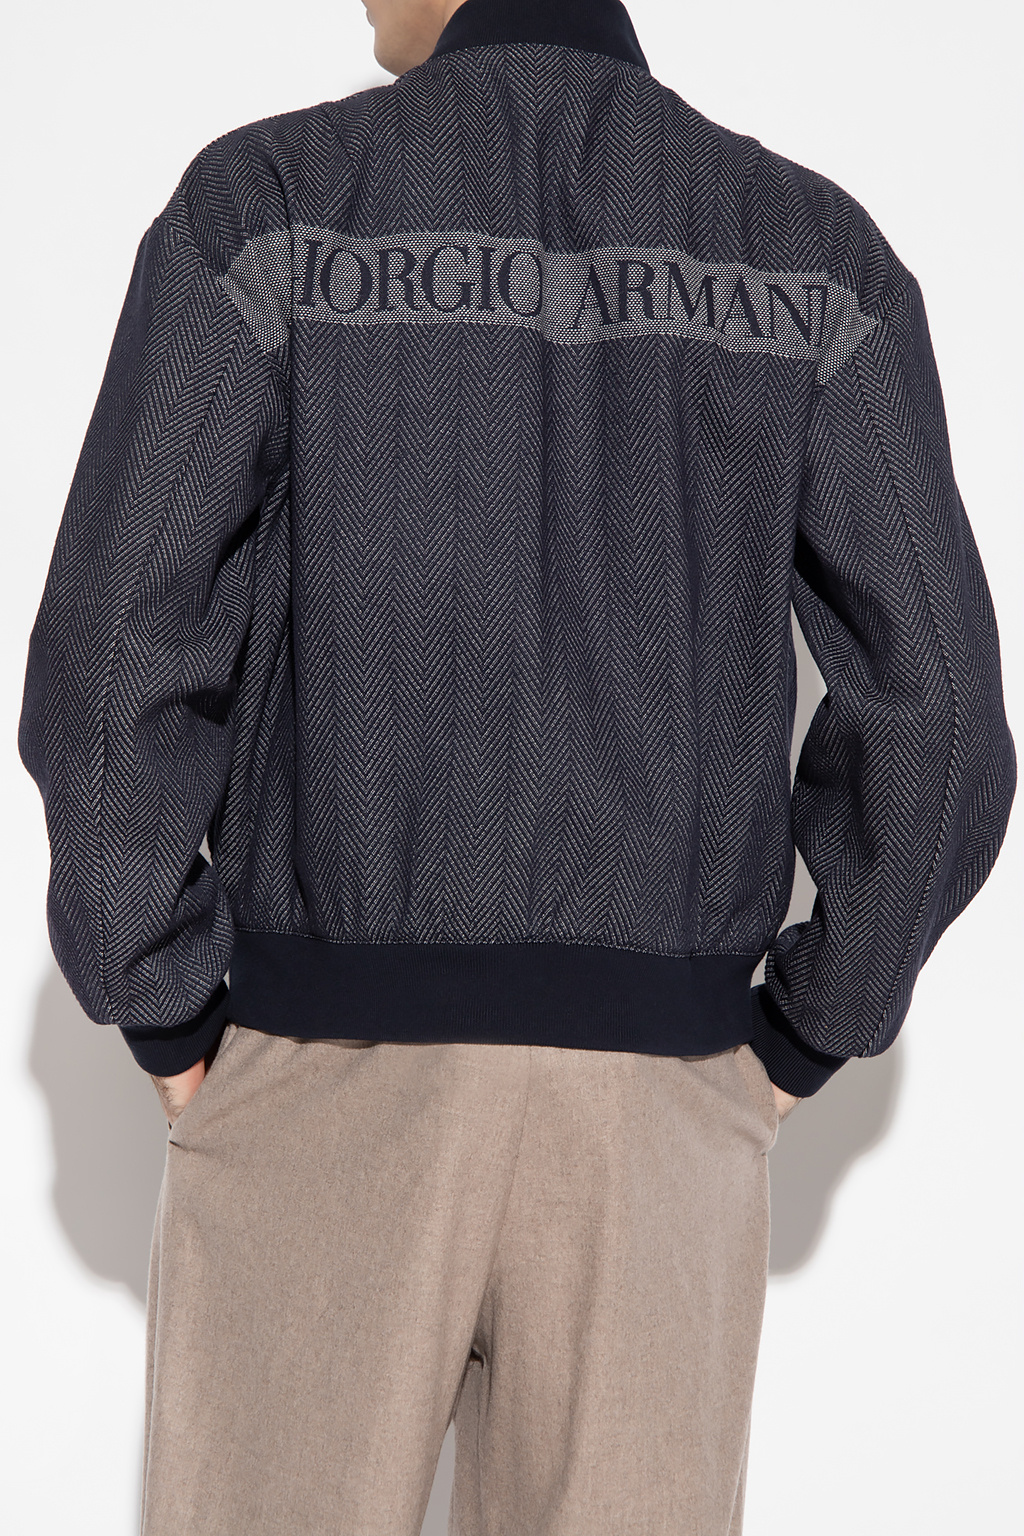 Giorgio Armani Hemd Bomber jacket